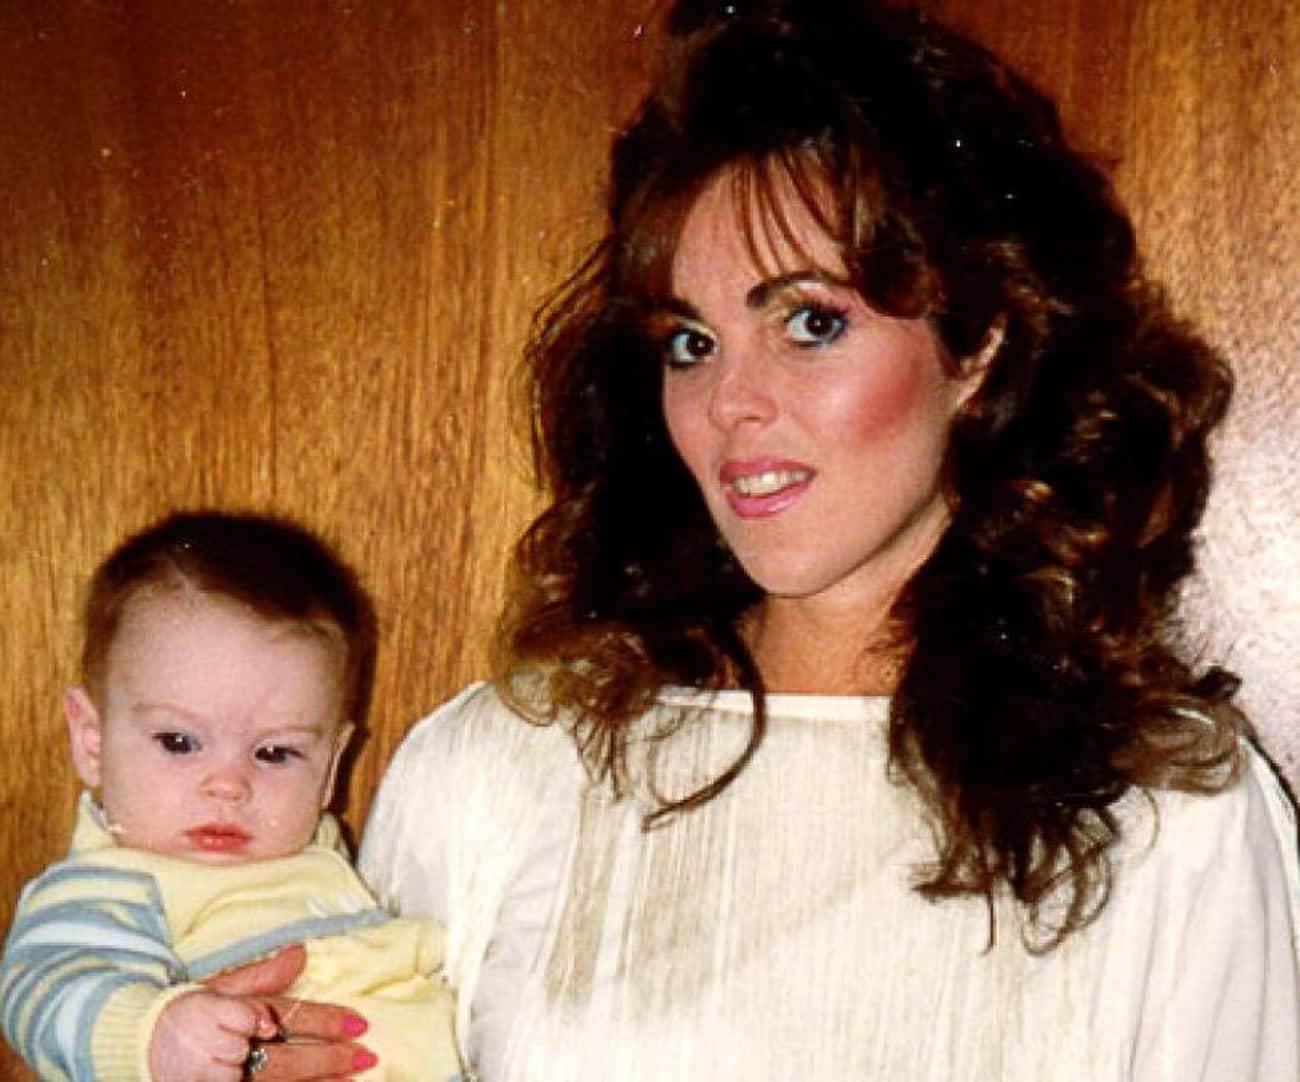 Young Lindsay Lohan as a Baby with Dina Lohan